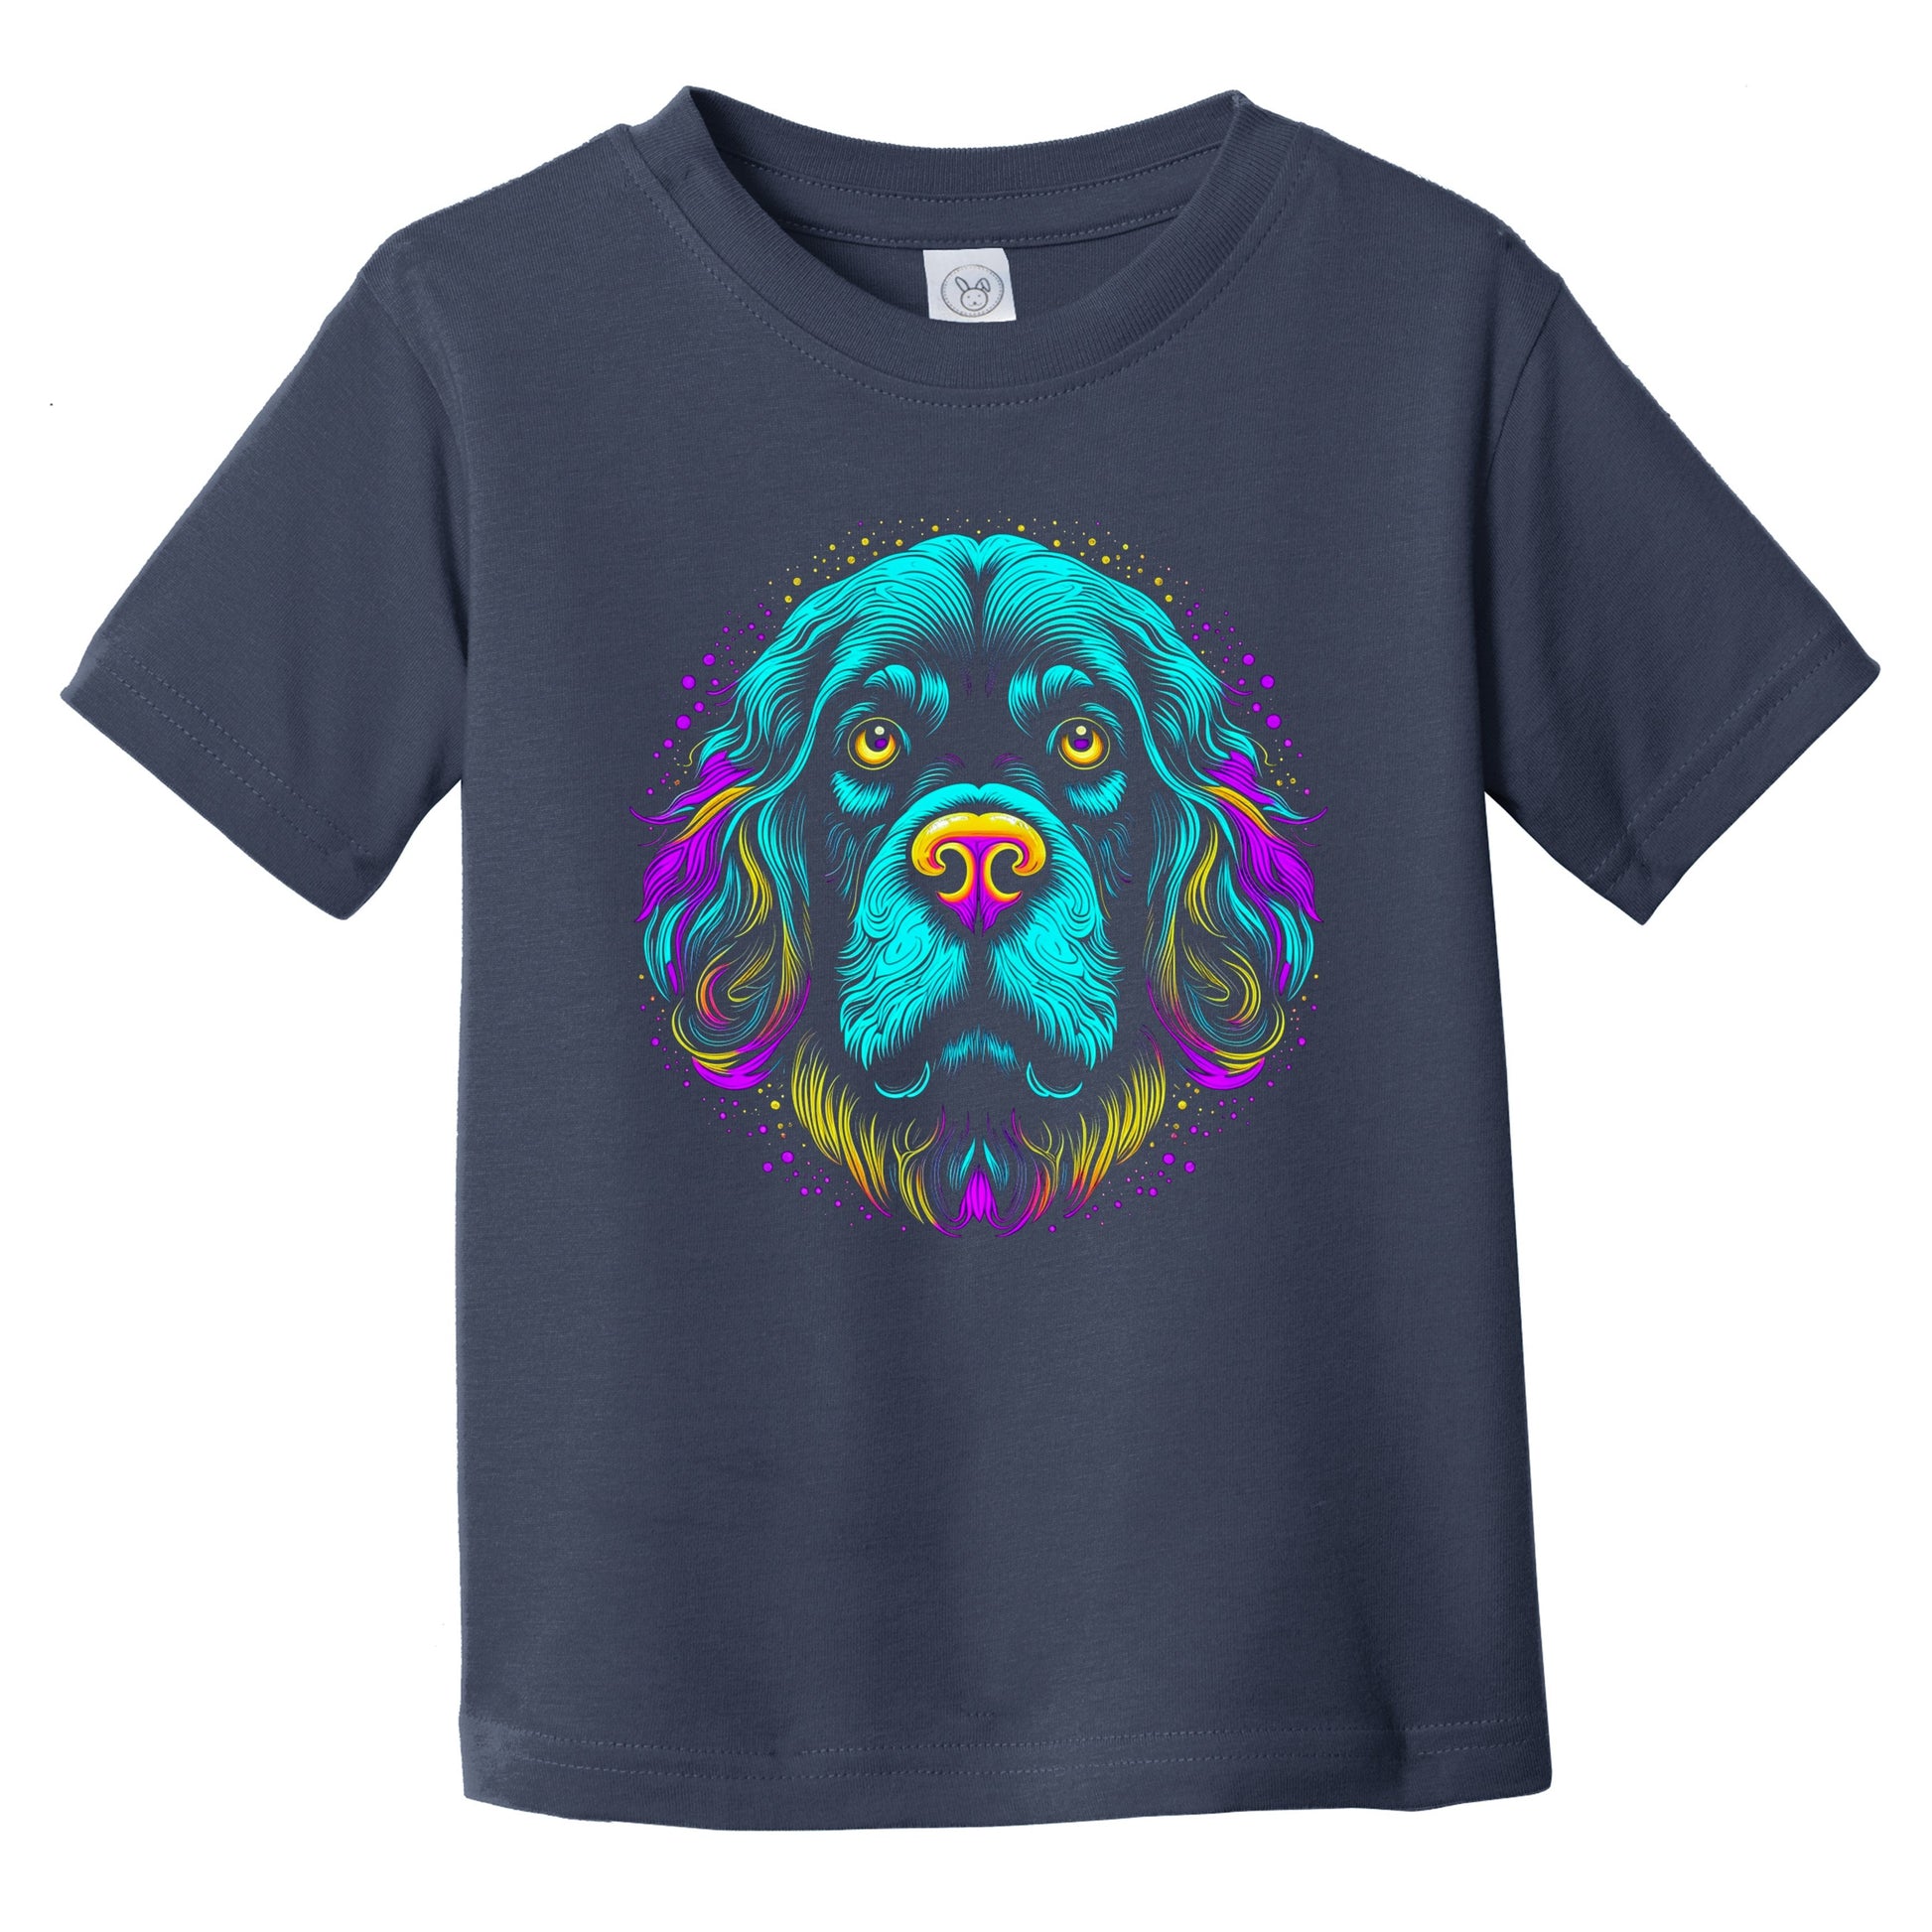 Colorful Bright Newfoundland Vibrant Psychedelic Dog Art Infant Toddler T-Shirt